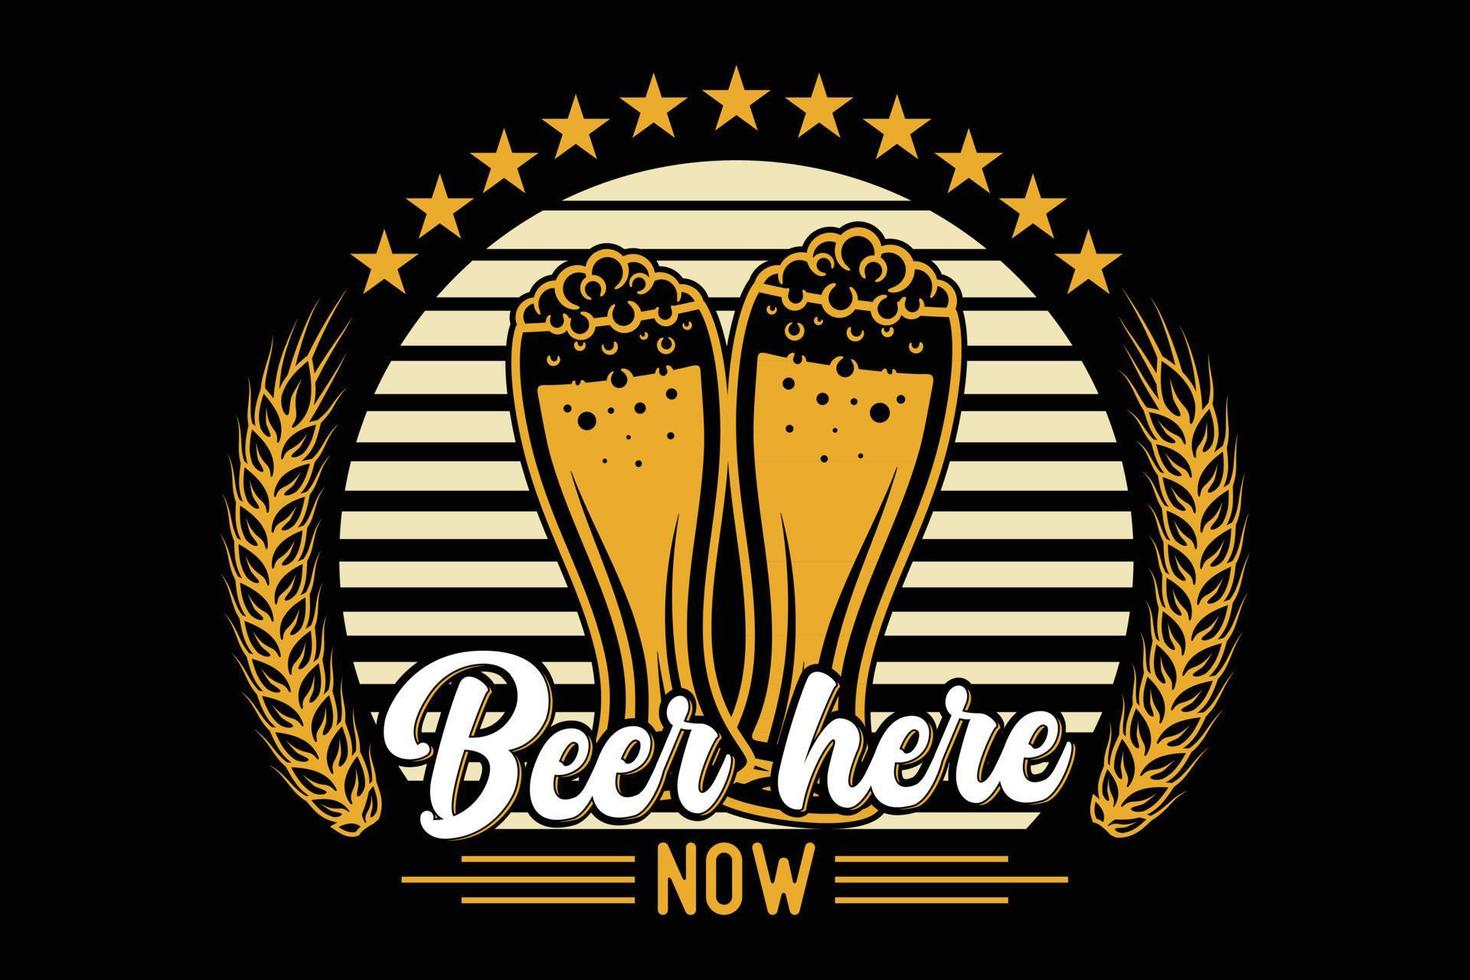 Bier hier jetzt Typografie-Bier-T-Shirt-Design vektor